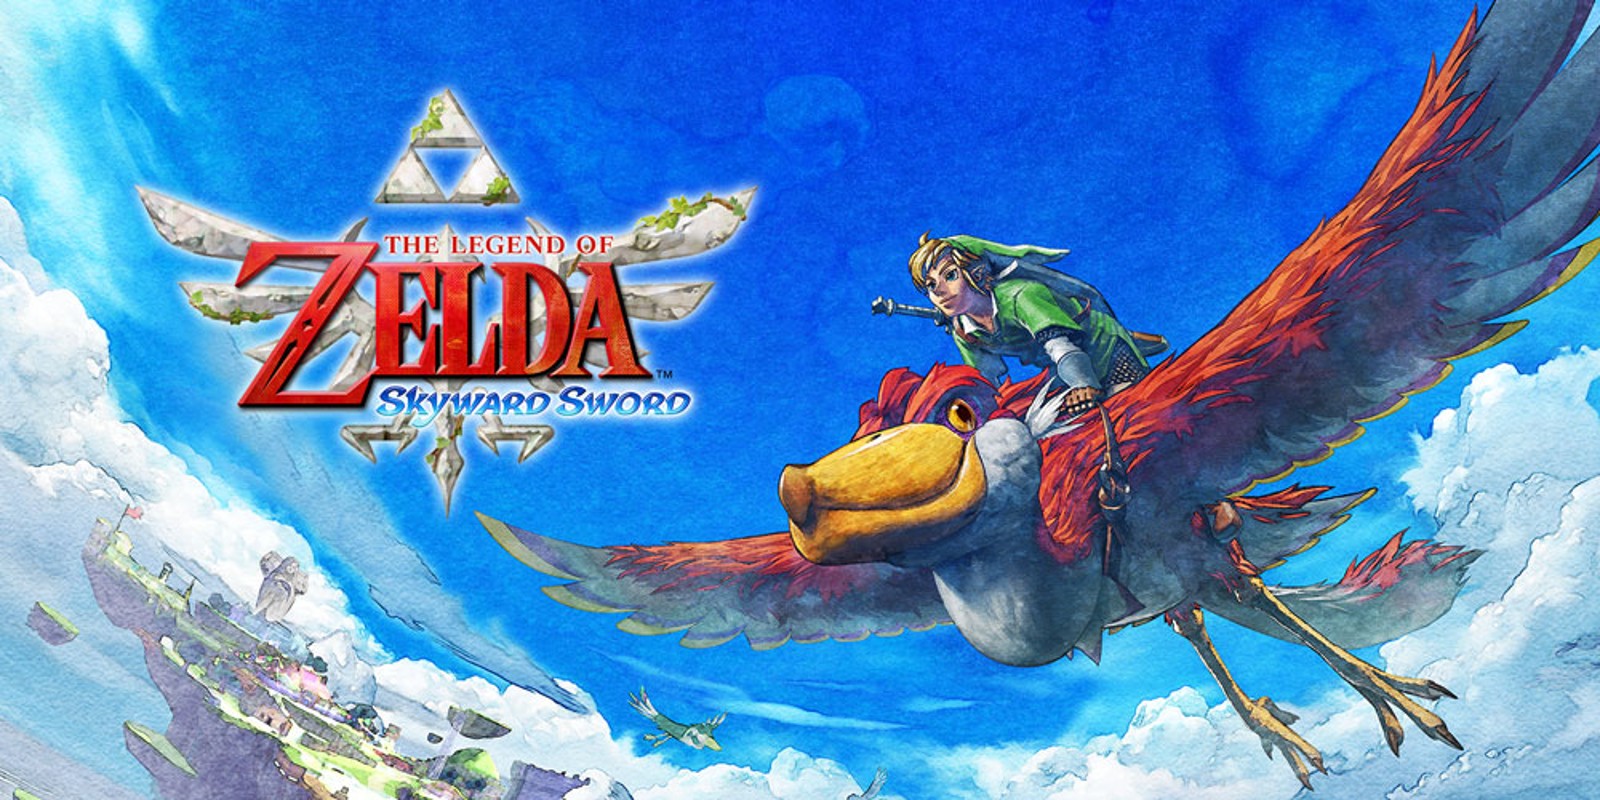 Link flies on a Loftwing in key art for The Legend of Zelda: Skyward Sword. Image from Nintendo.